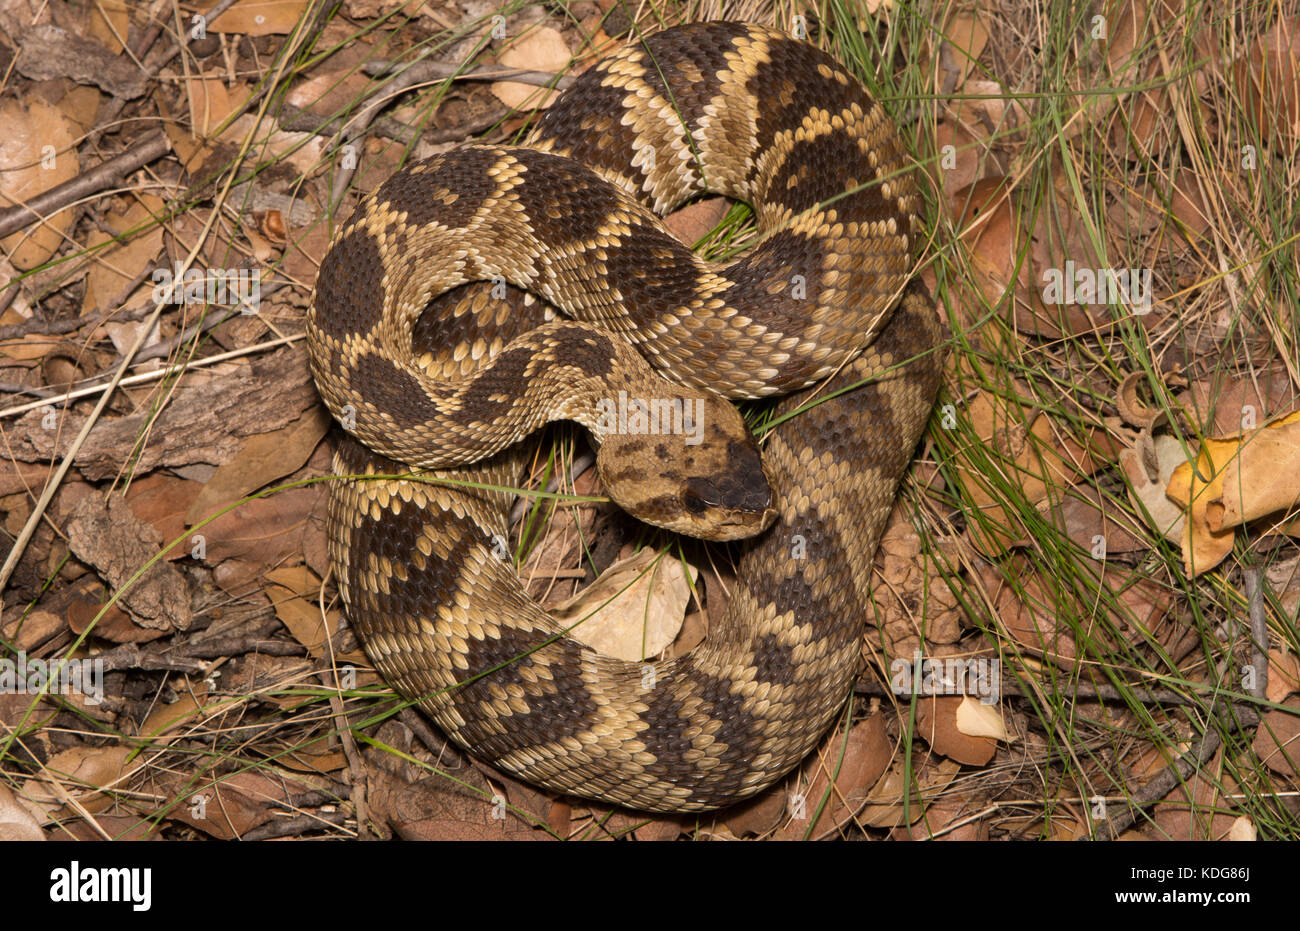 Western Black-tailed Rattlesnake (Crotalus molossus) from Cochise County, Arizona, USA. Stock Photo